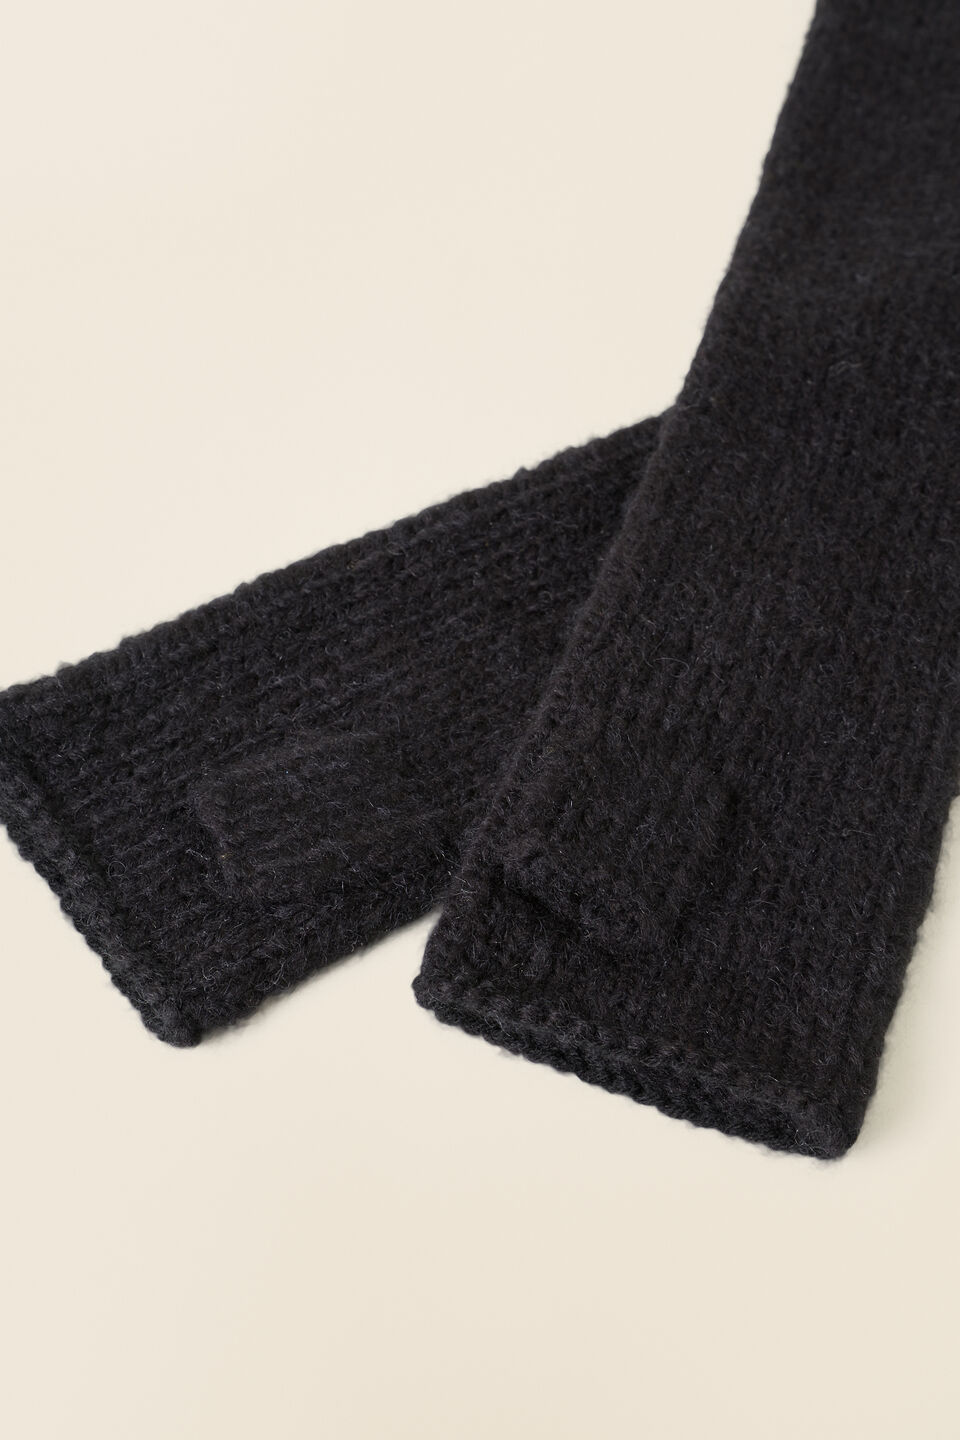 Chunky Knit Arm Warmers  Black